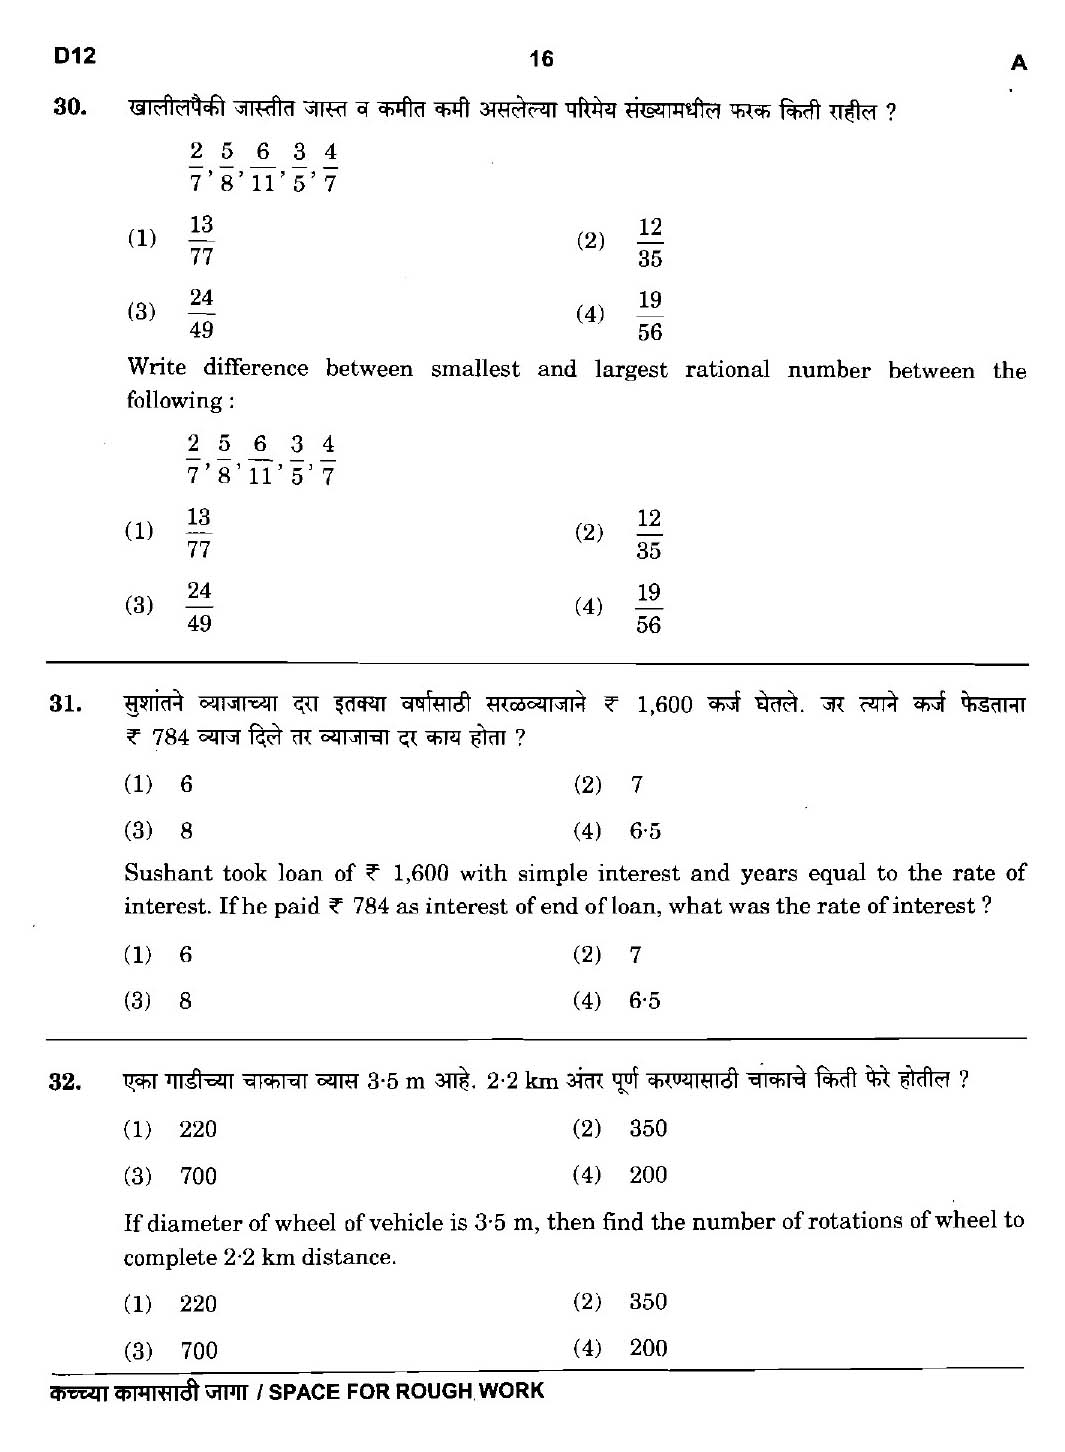 Maharashtra PSC Clerk Typist Main Exam Question Paper 2018 15